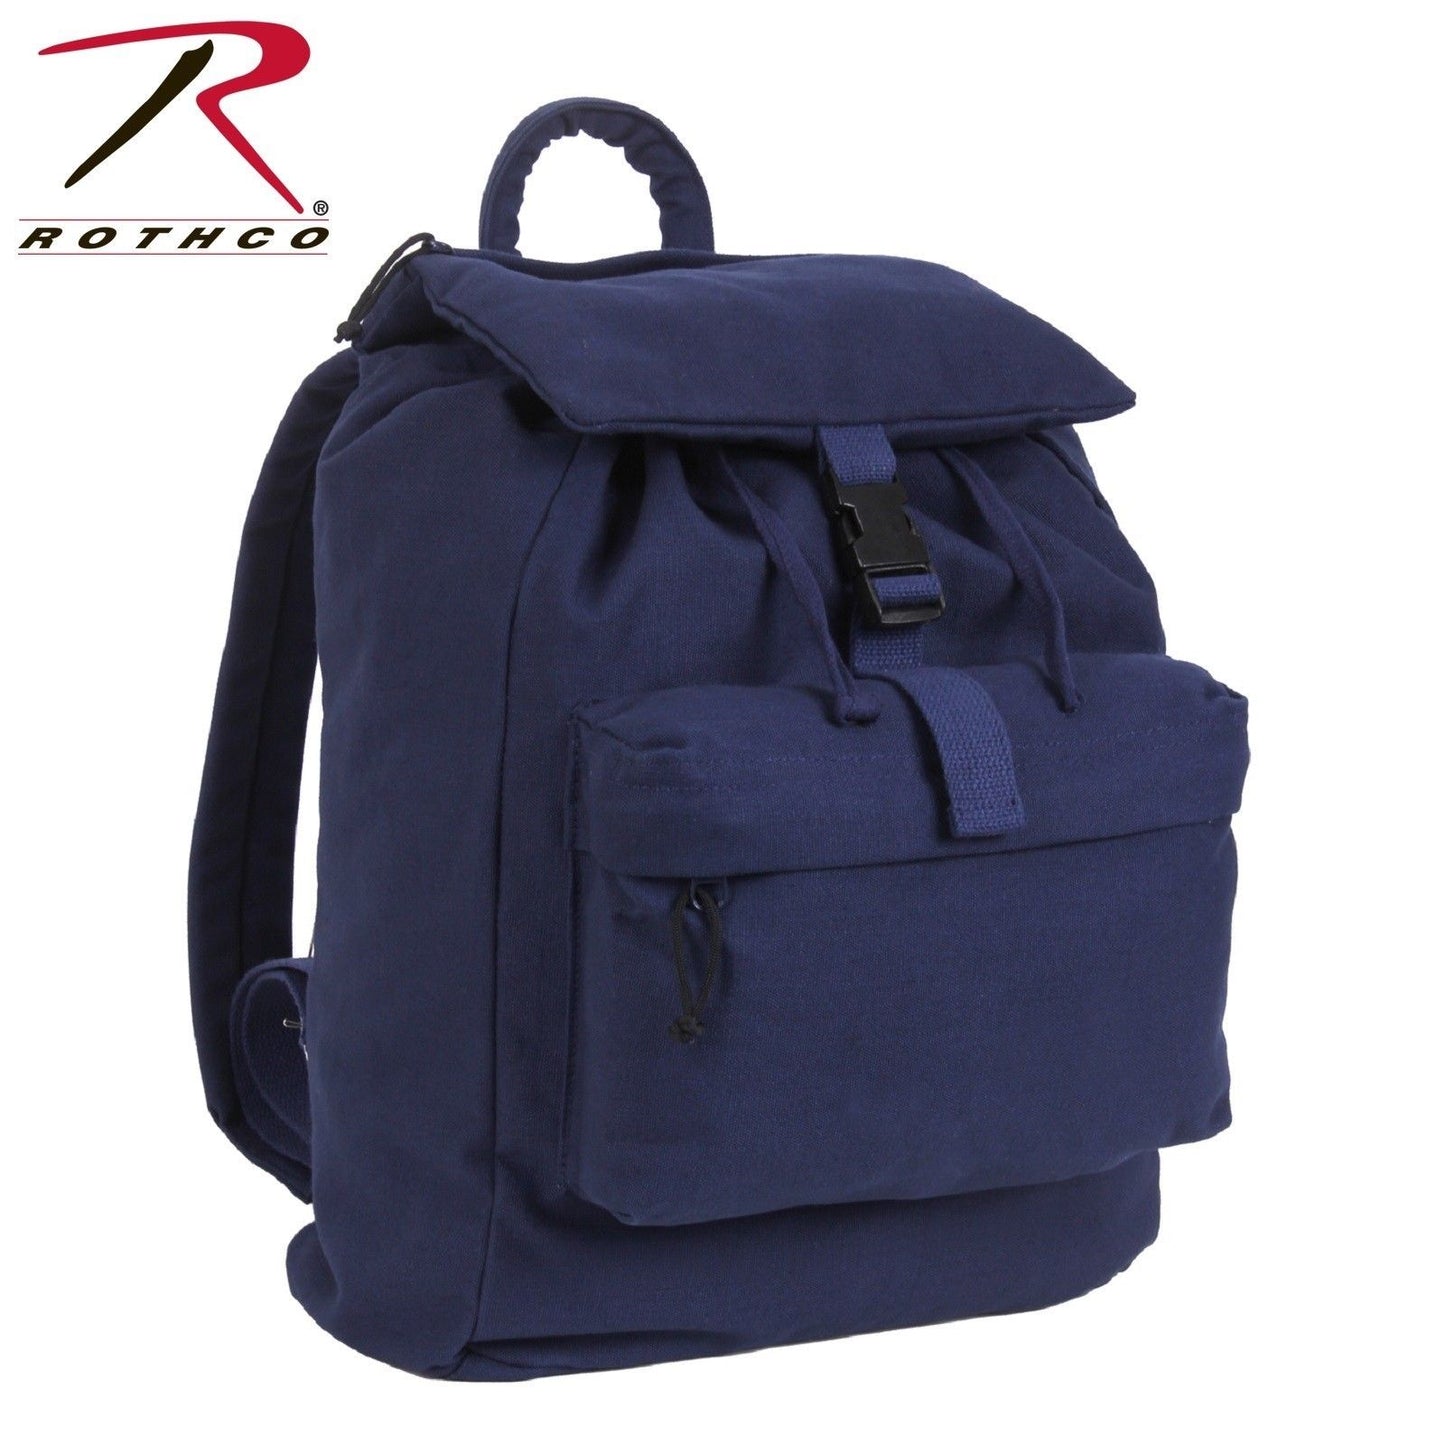 Rothco Canvas Daypack - Navy Blue Backpack School Bag - Hiking Bag Gear Bag